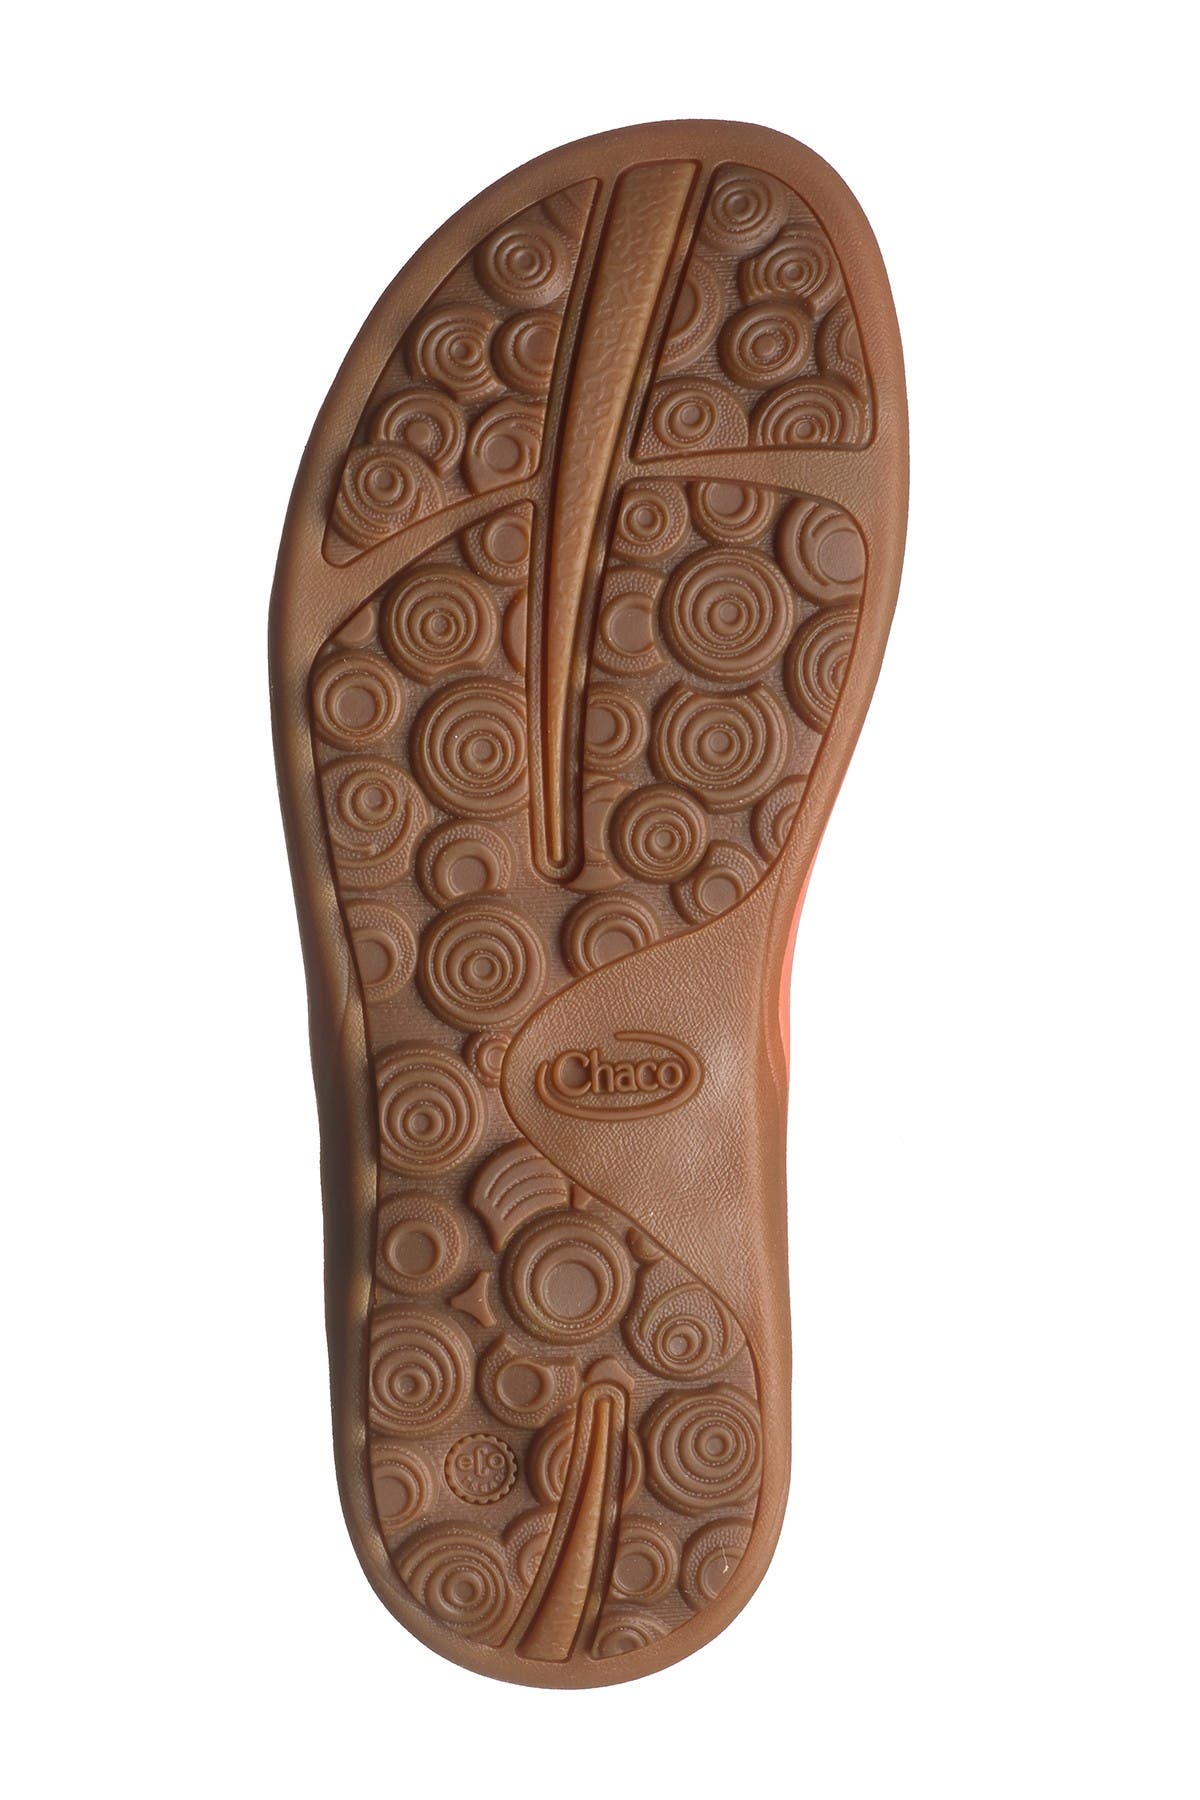 chaco loveland leather sandal